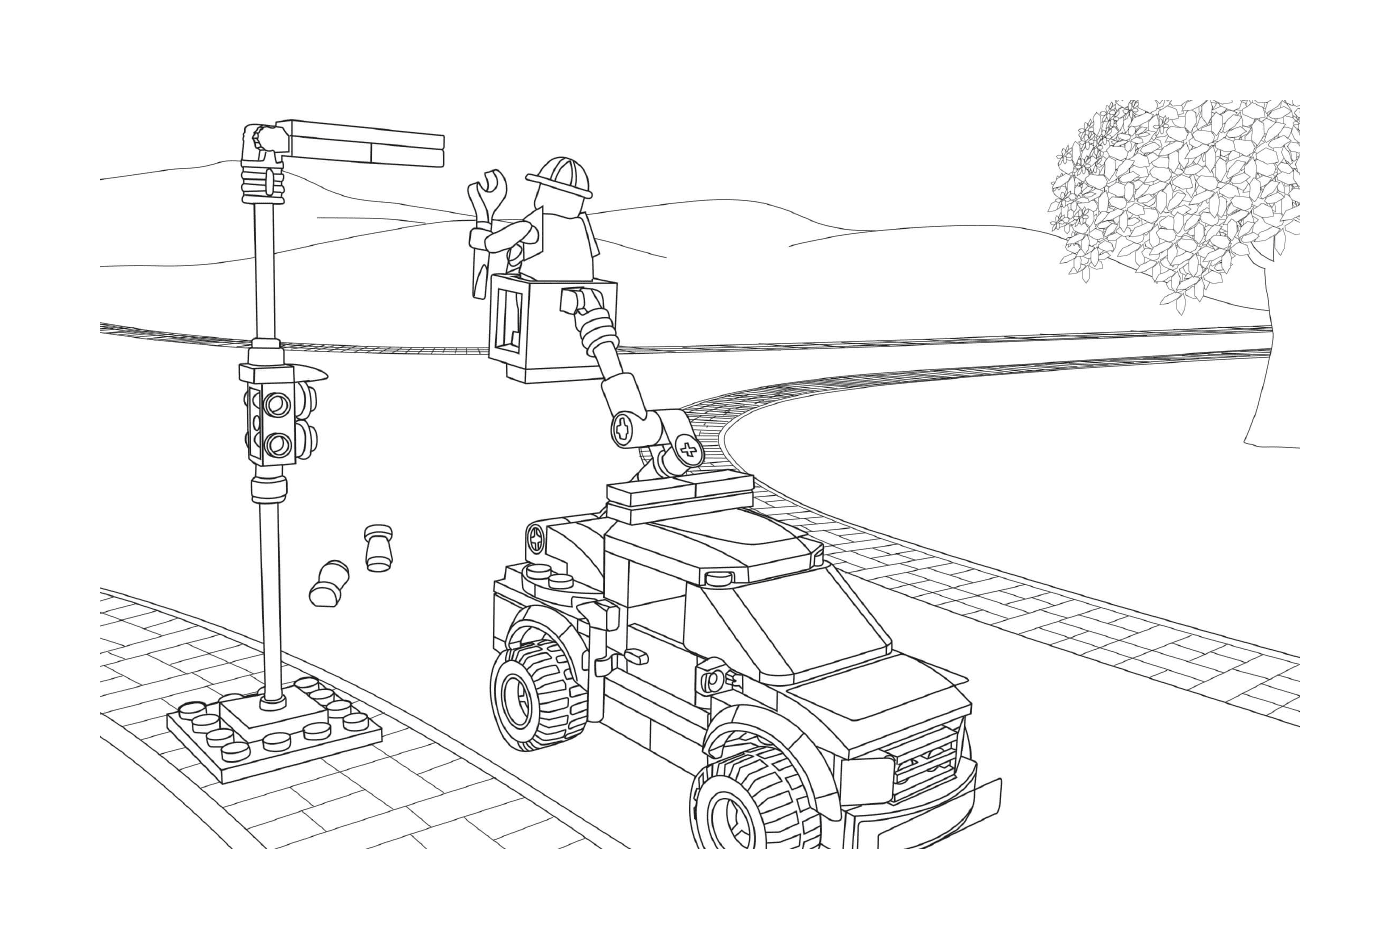  Ремонт грузовика для уличных фонарей в Лего-Сити 